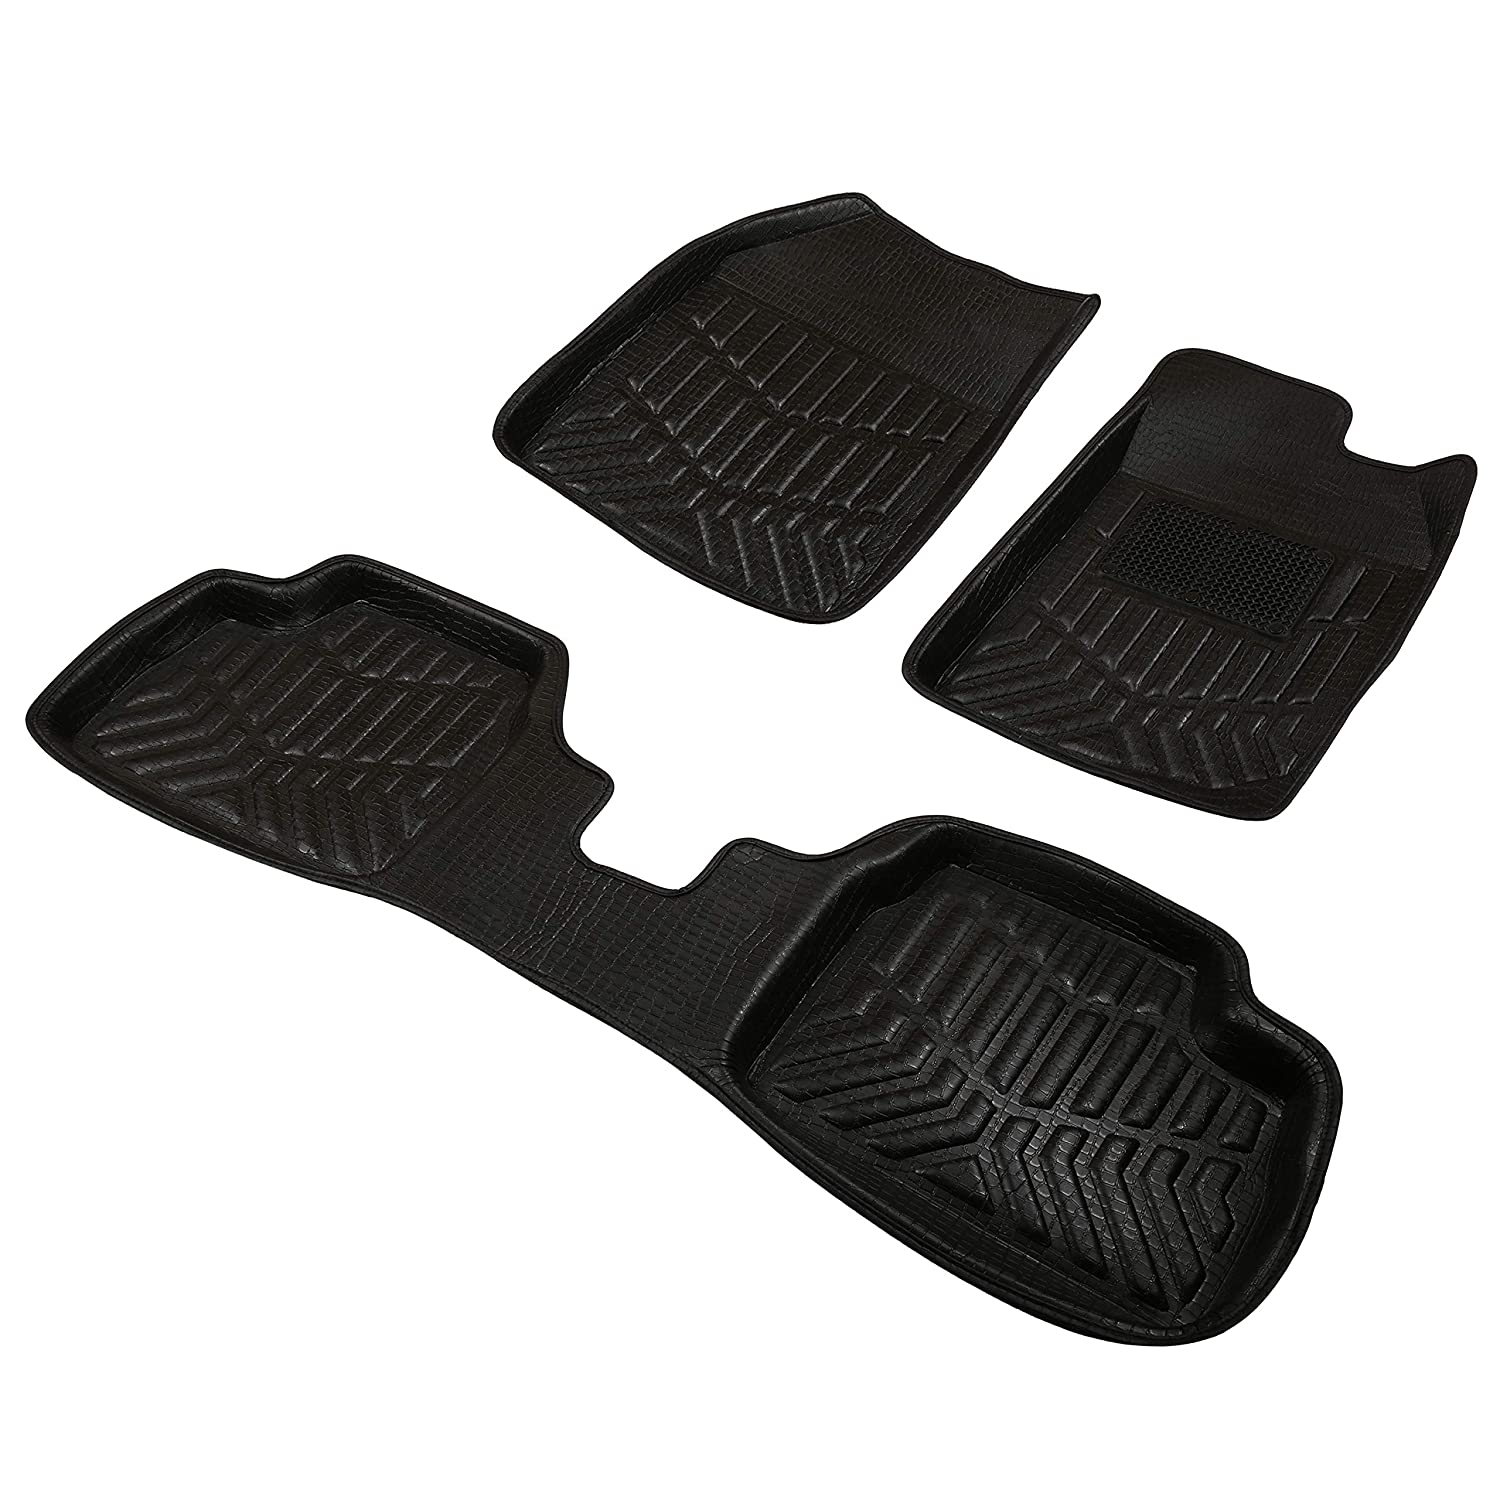 Drivn 3D Customised Car Floor Mat for Toyota Innova Crysta - Black (Set of 4)